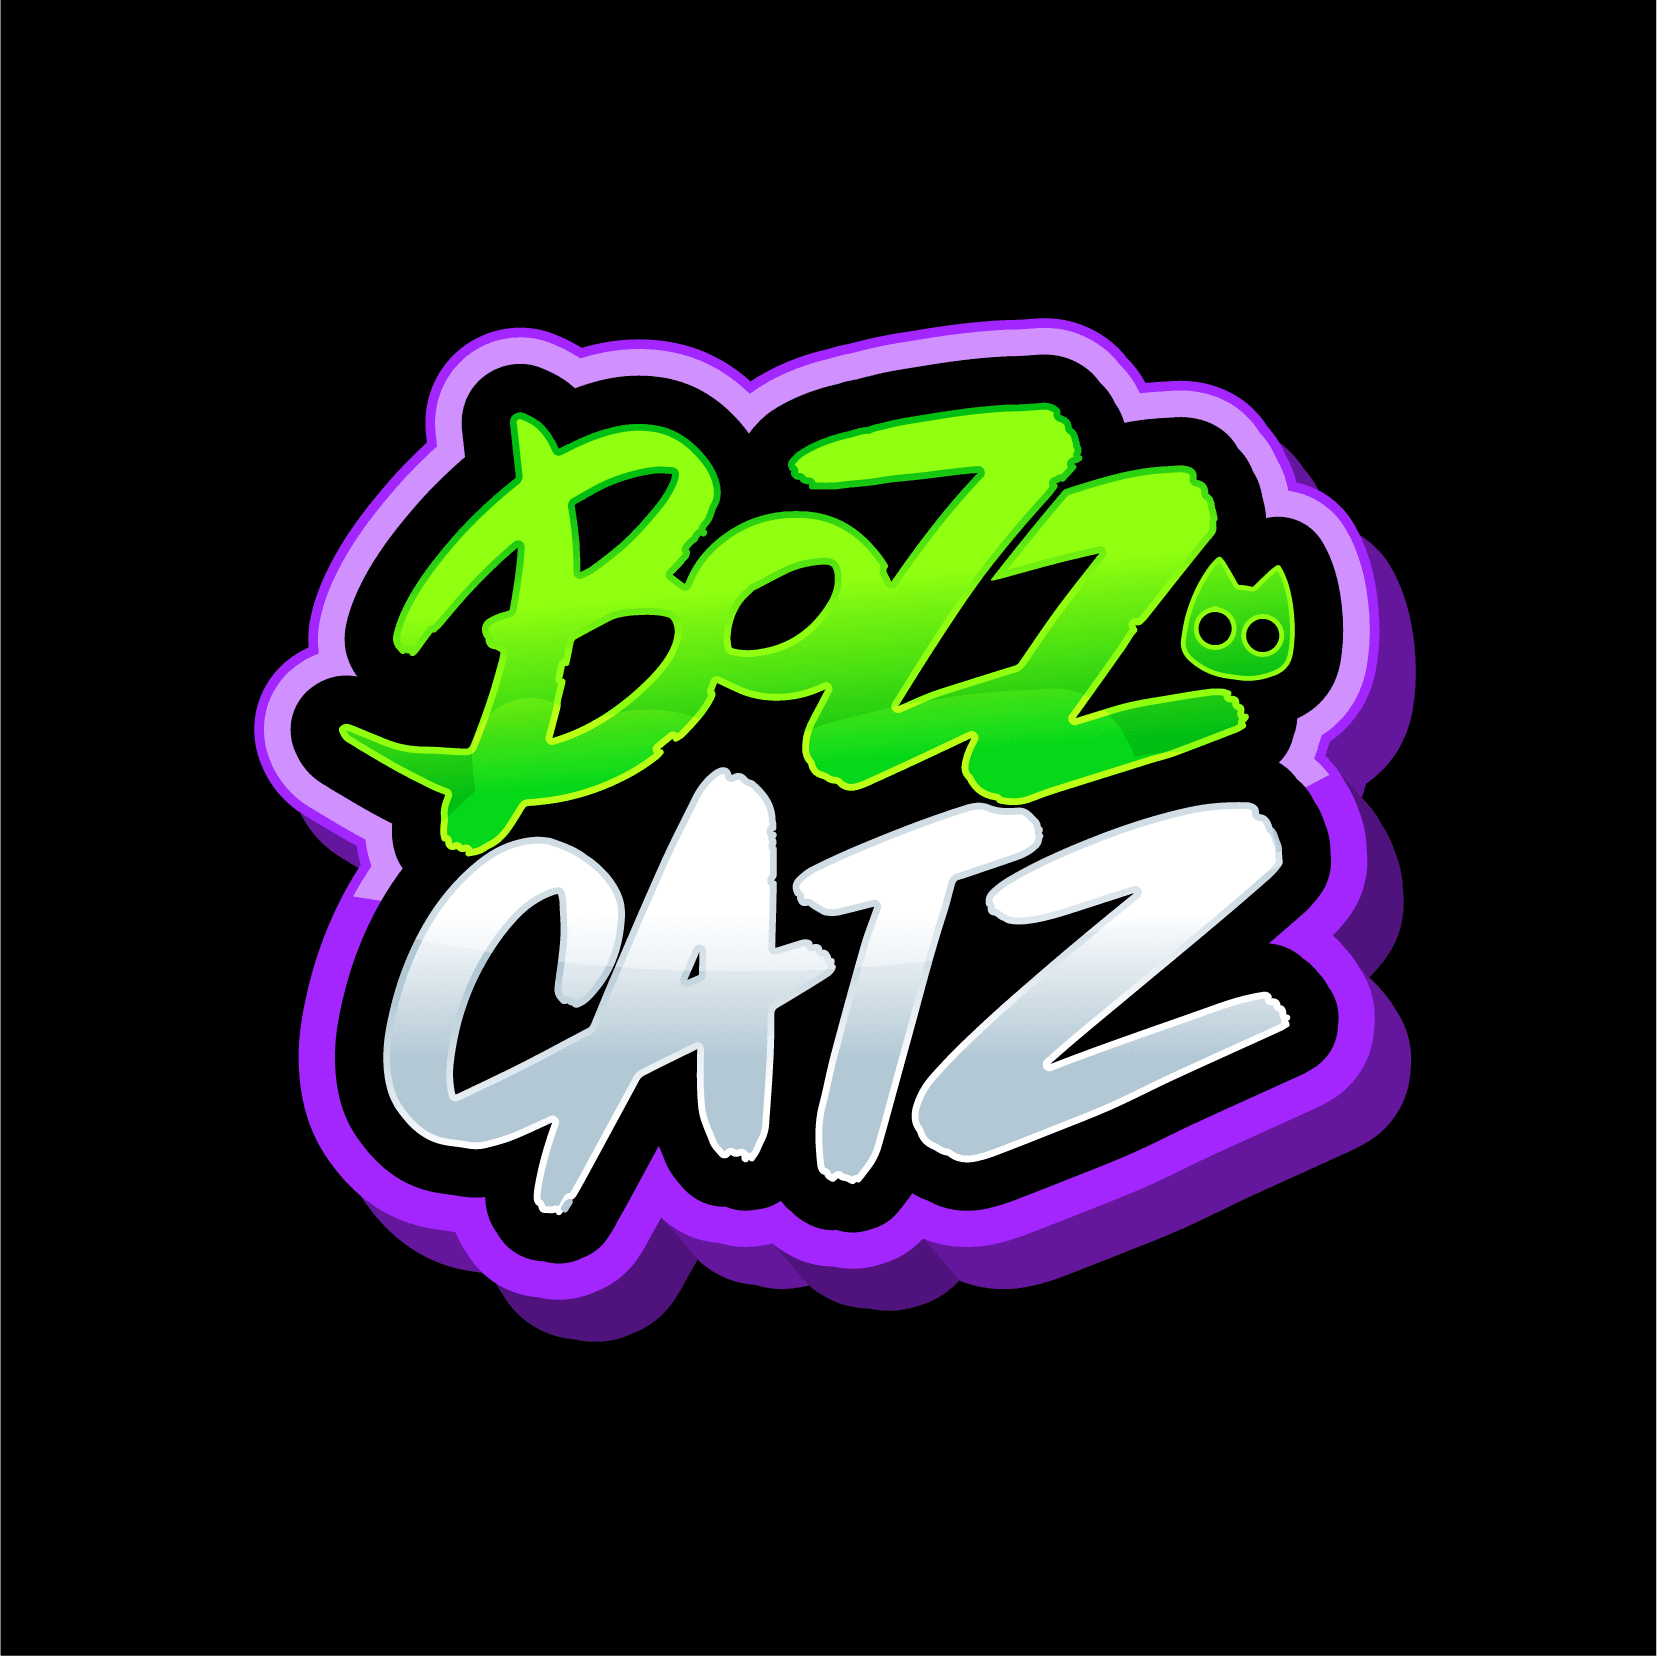 BozzCatz-Deployer